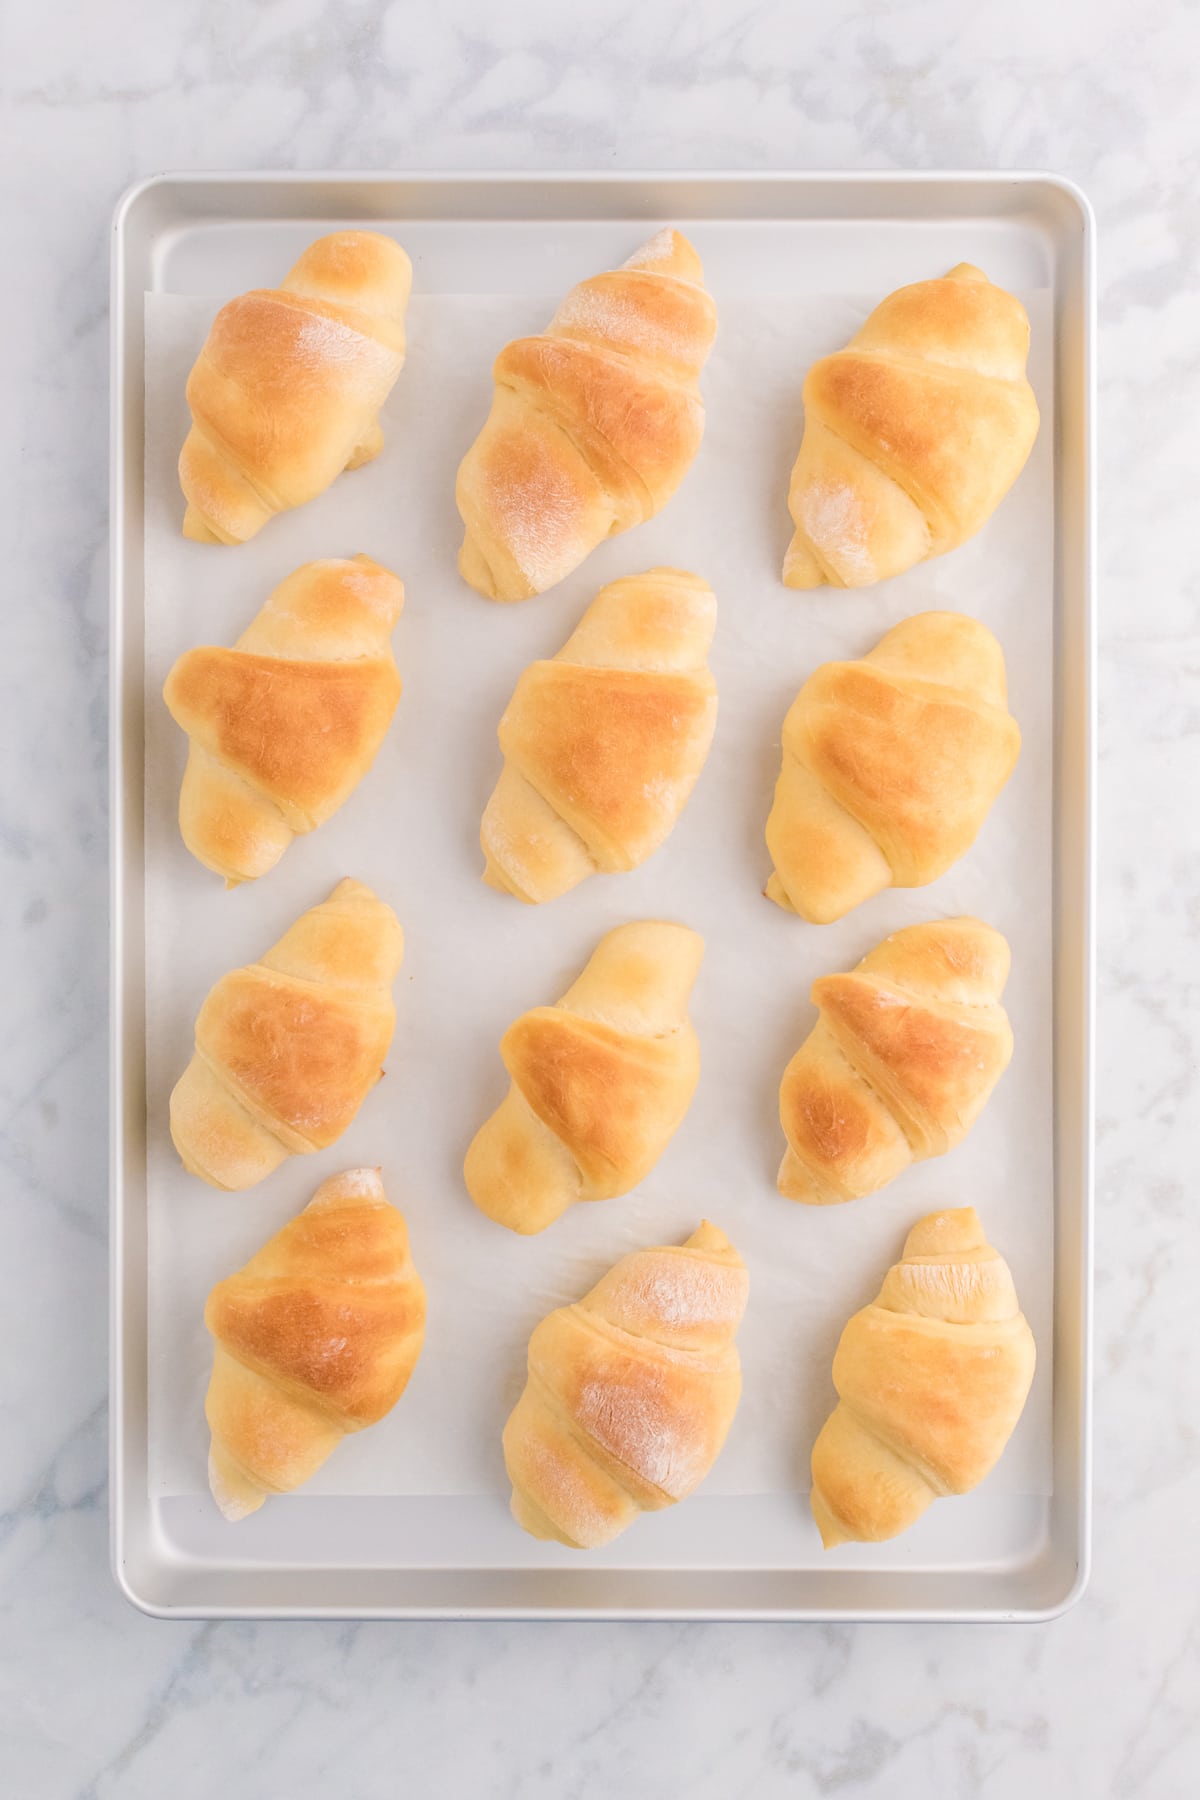 Freshly baked crescent rolls on a baking sheet